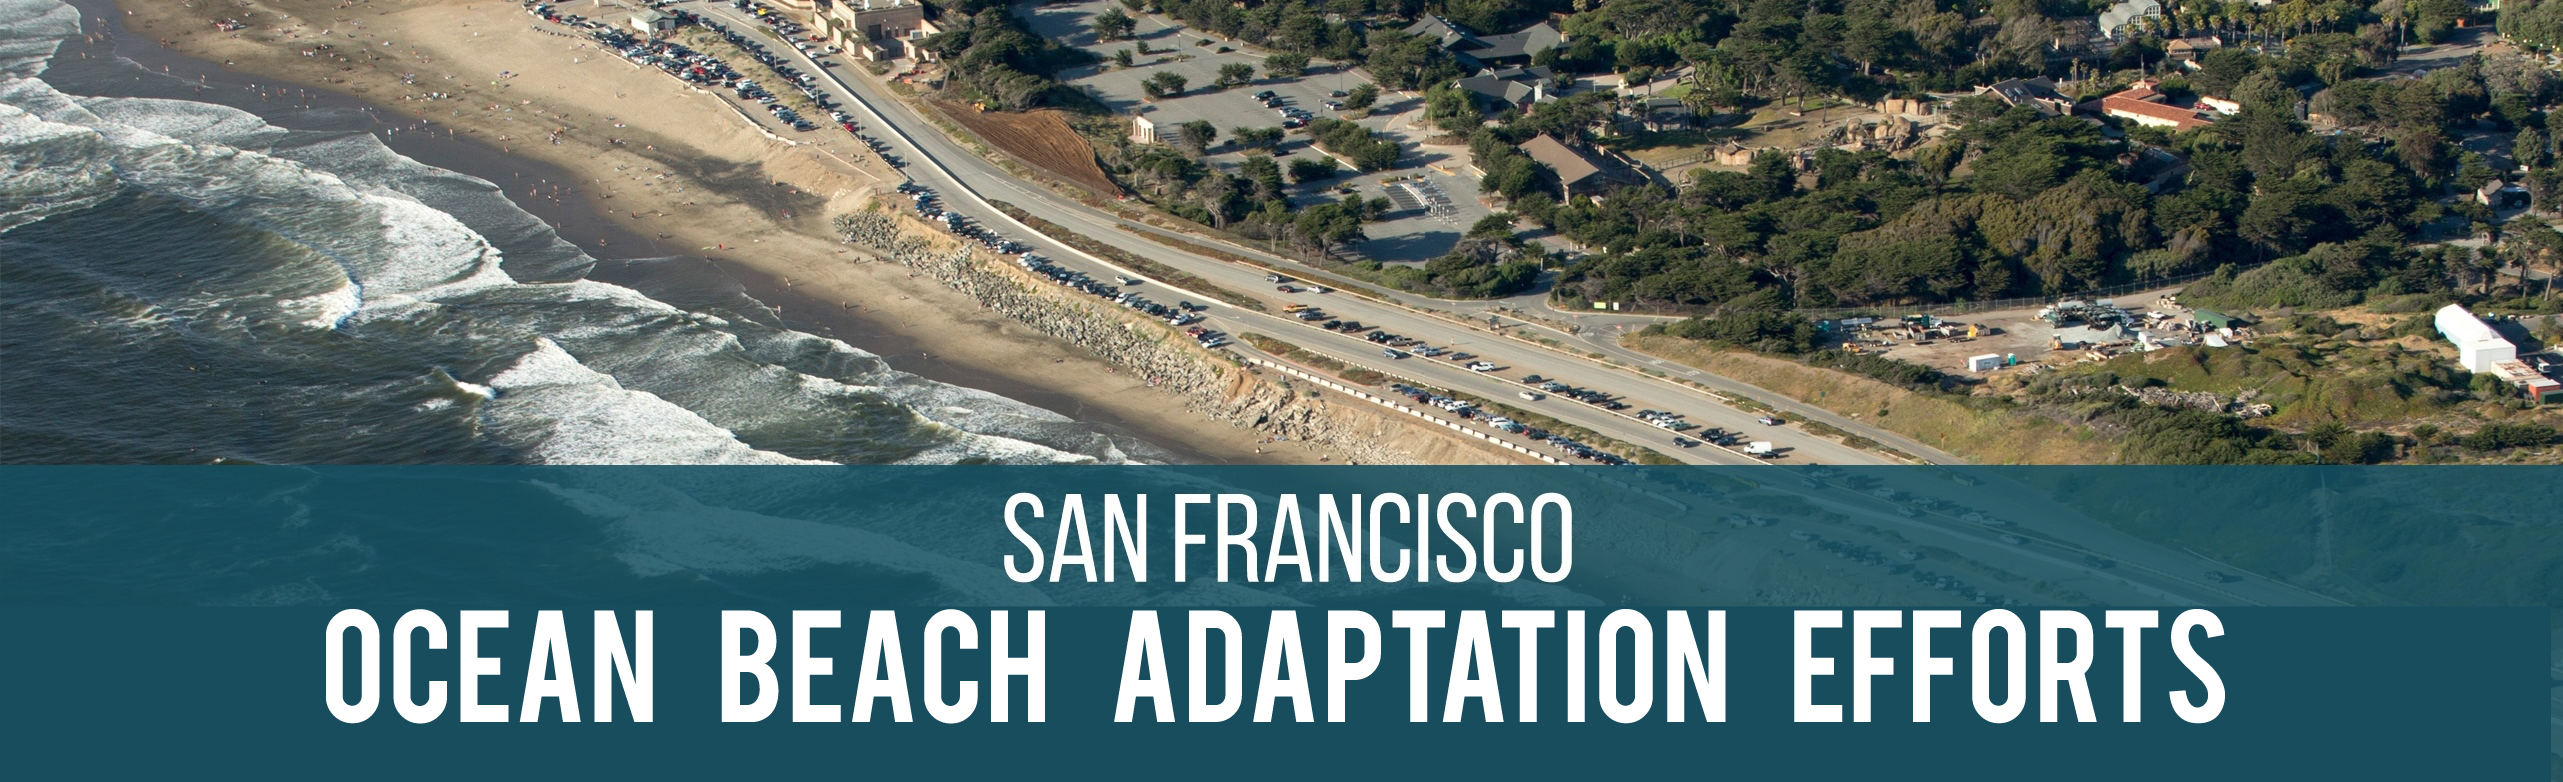 San Francisco Ocean Beach Efforts